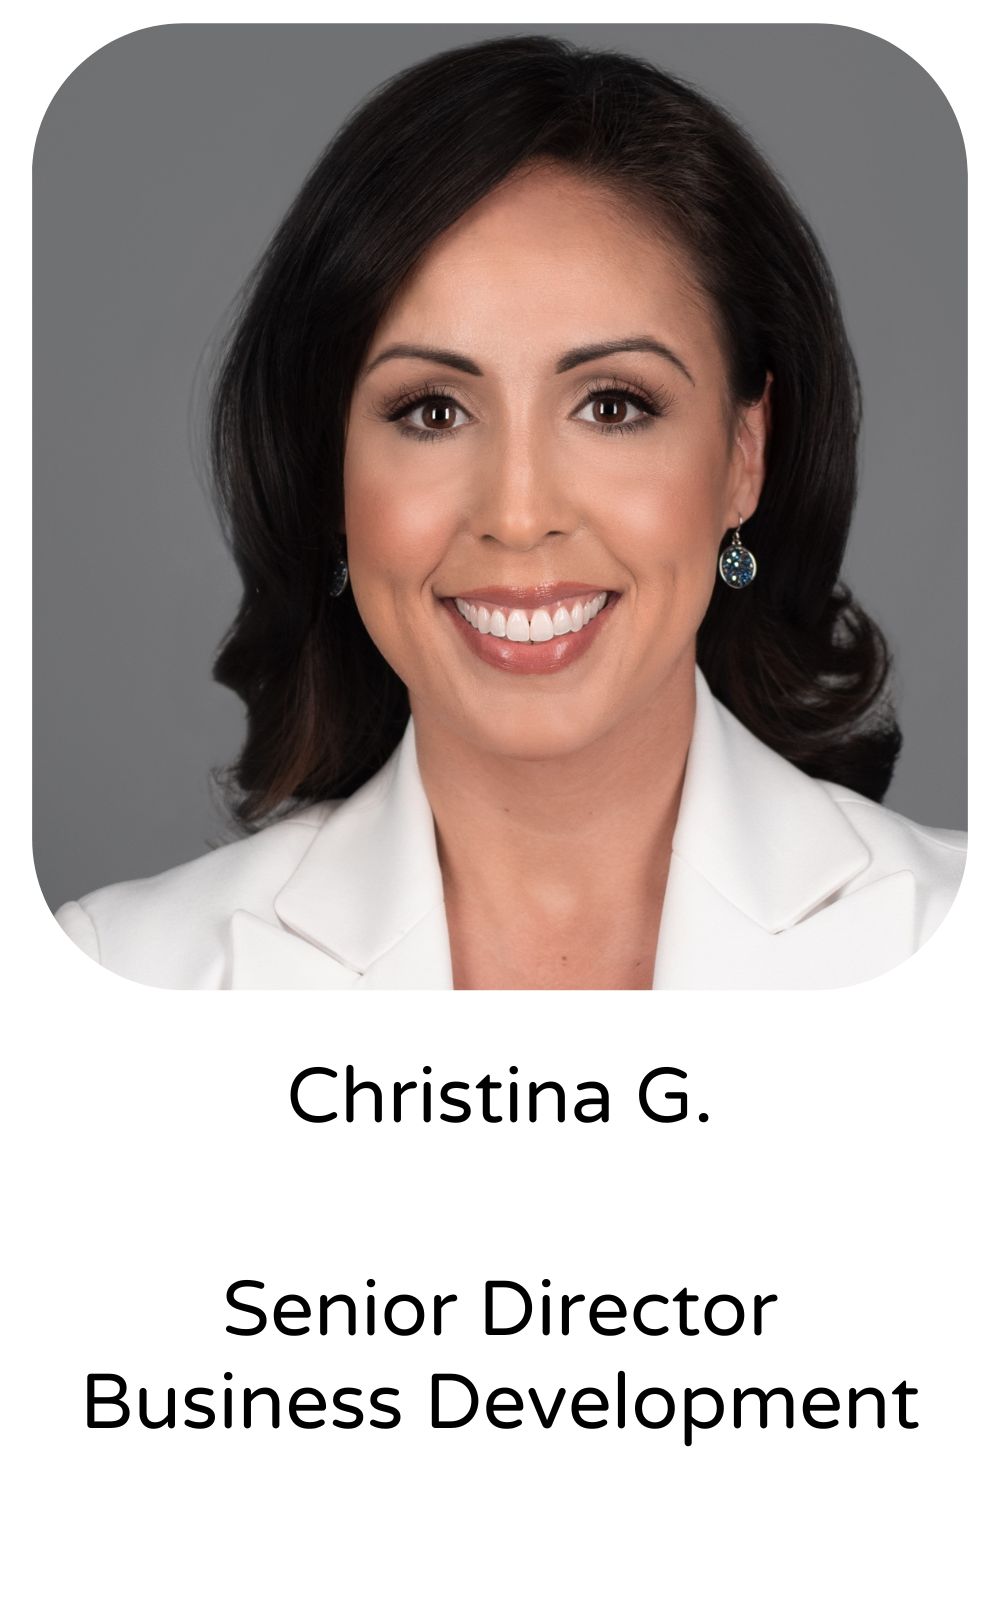 Christina G, Senior Director, Business Development